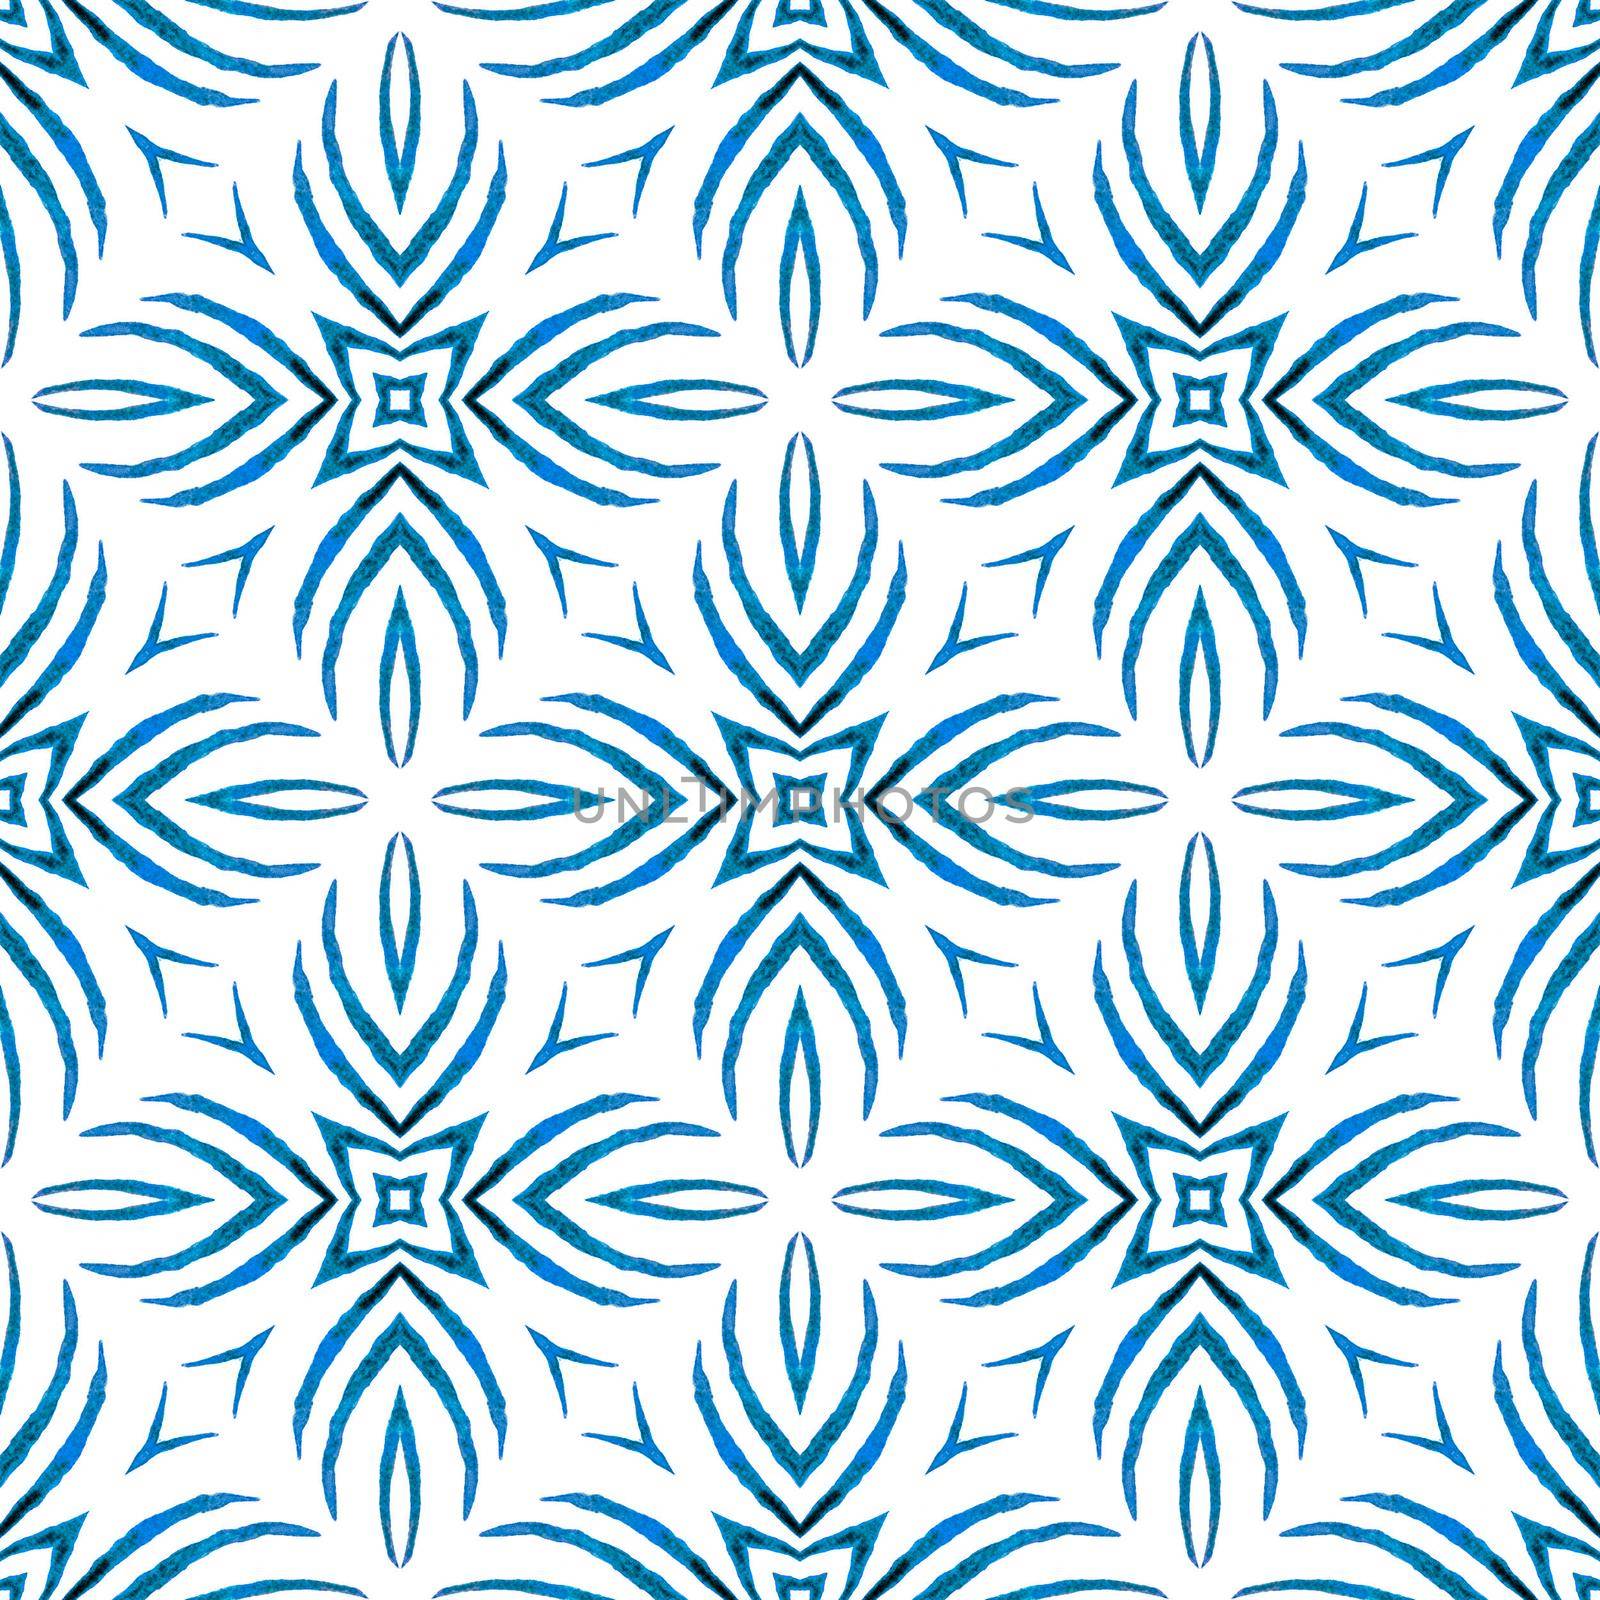 Textile ready ravishing print, swimwear fabric, wallpaper, wrapping. Blue extraordinary boho chic summer design. Oriental arabesque hand drawn border. Arabesque hand drawn design.